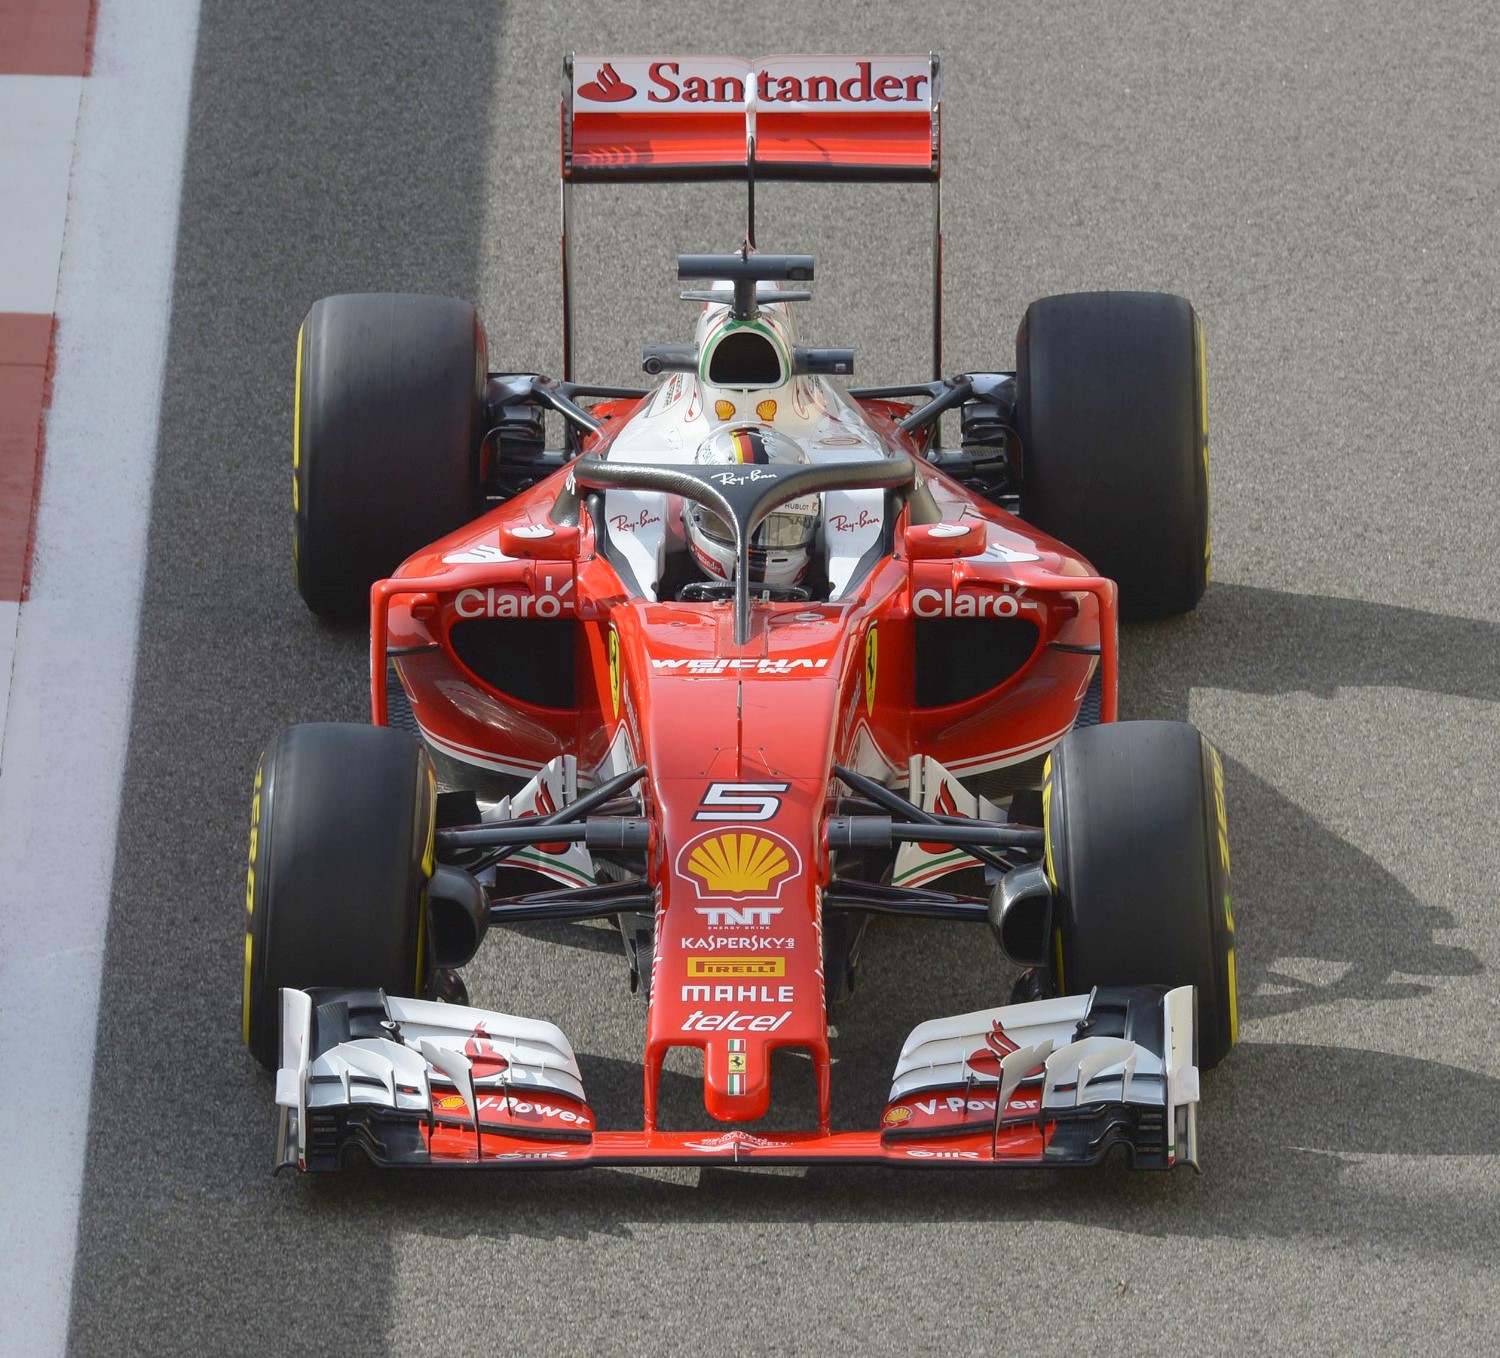 Vettel ran the Halo again in practice Friday